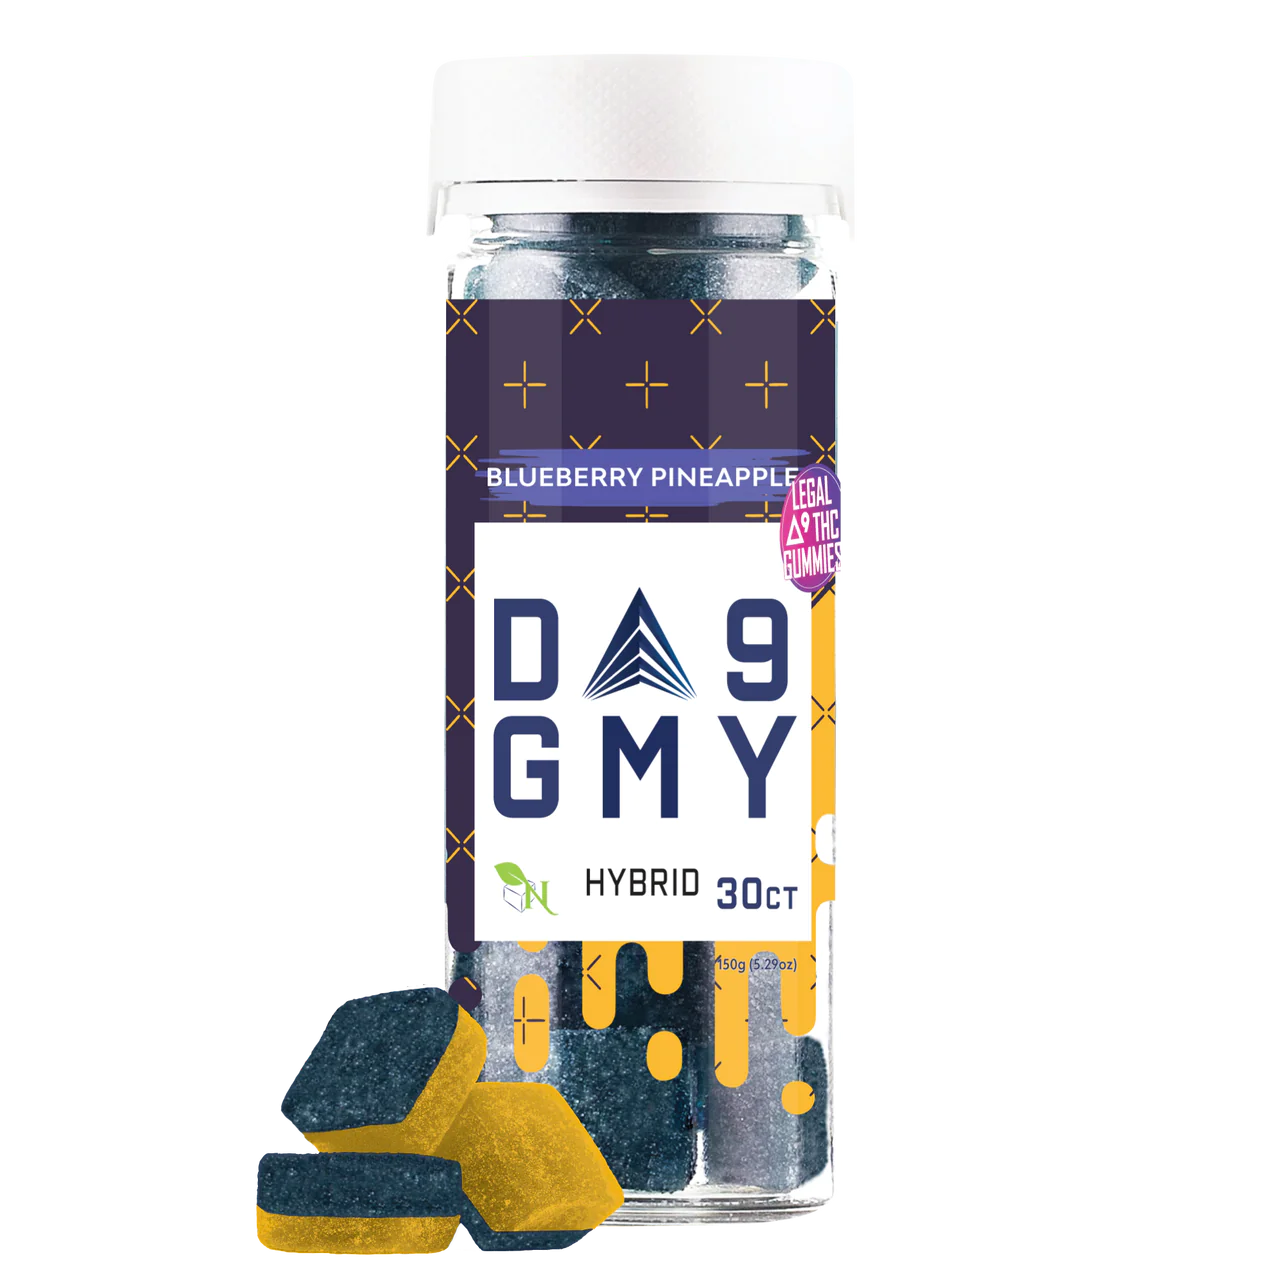 D9 GMY Delta-9 THC Gummies | Hybrid